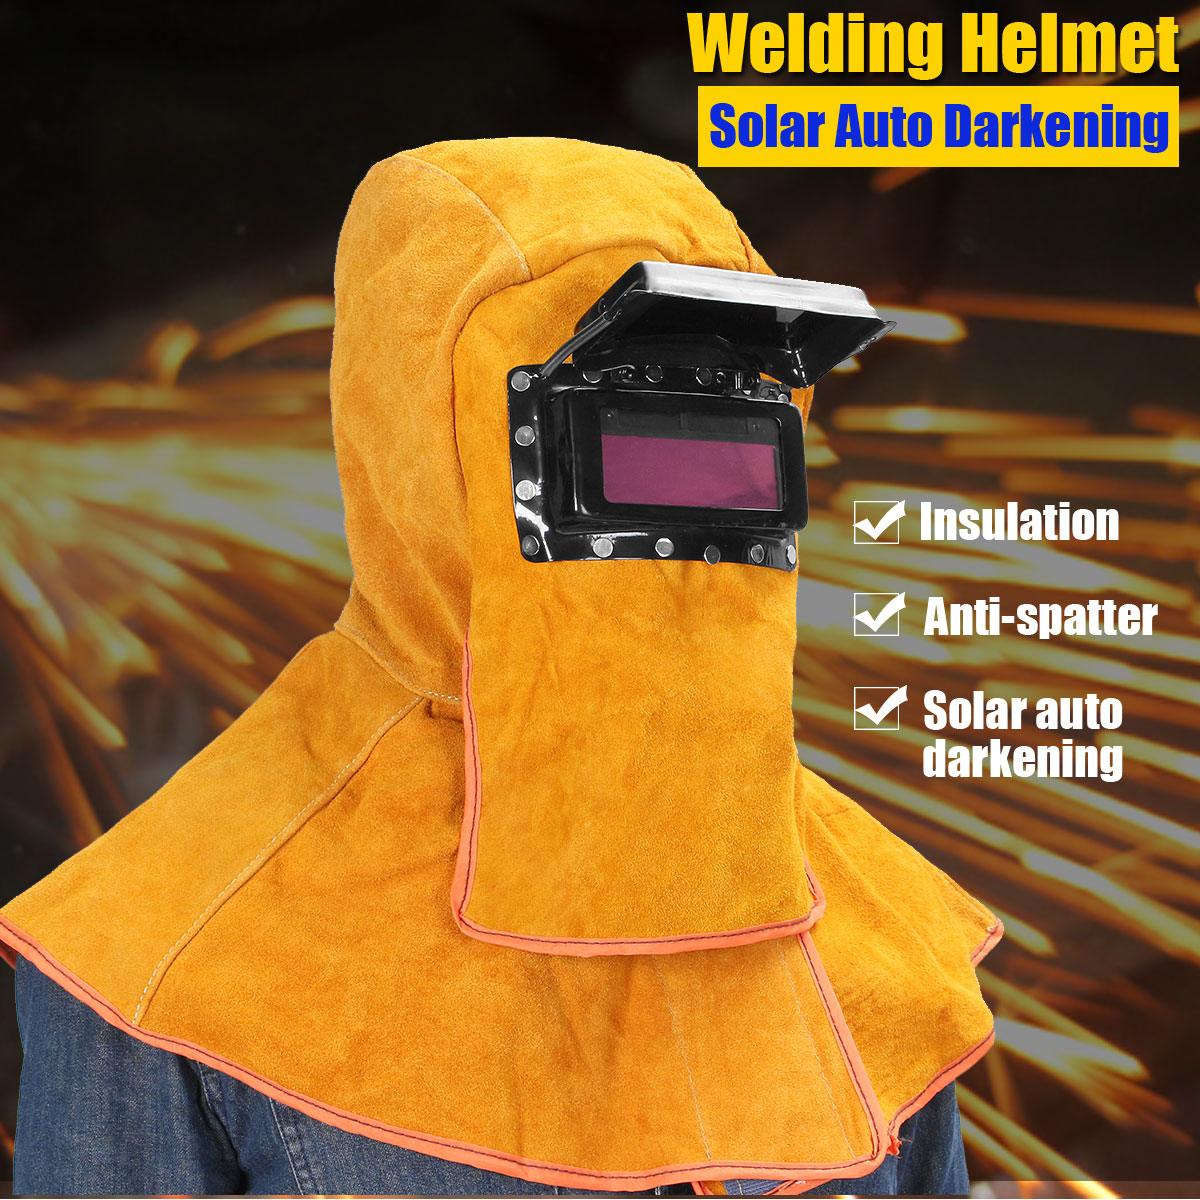 Leather-Solar-Auto-Darkening-Filter-Lens-Protect-Welding-Neck-Mask-Helmet-1339964-1